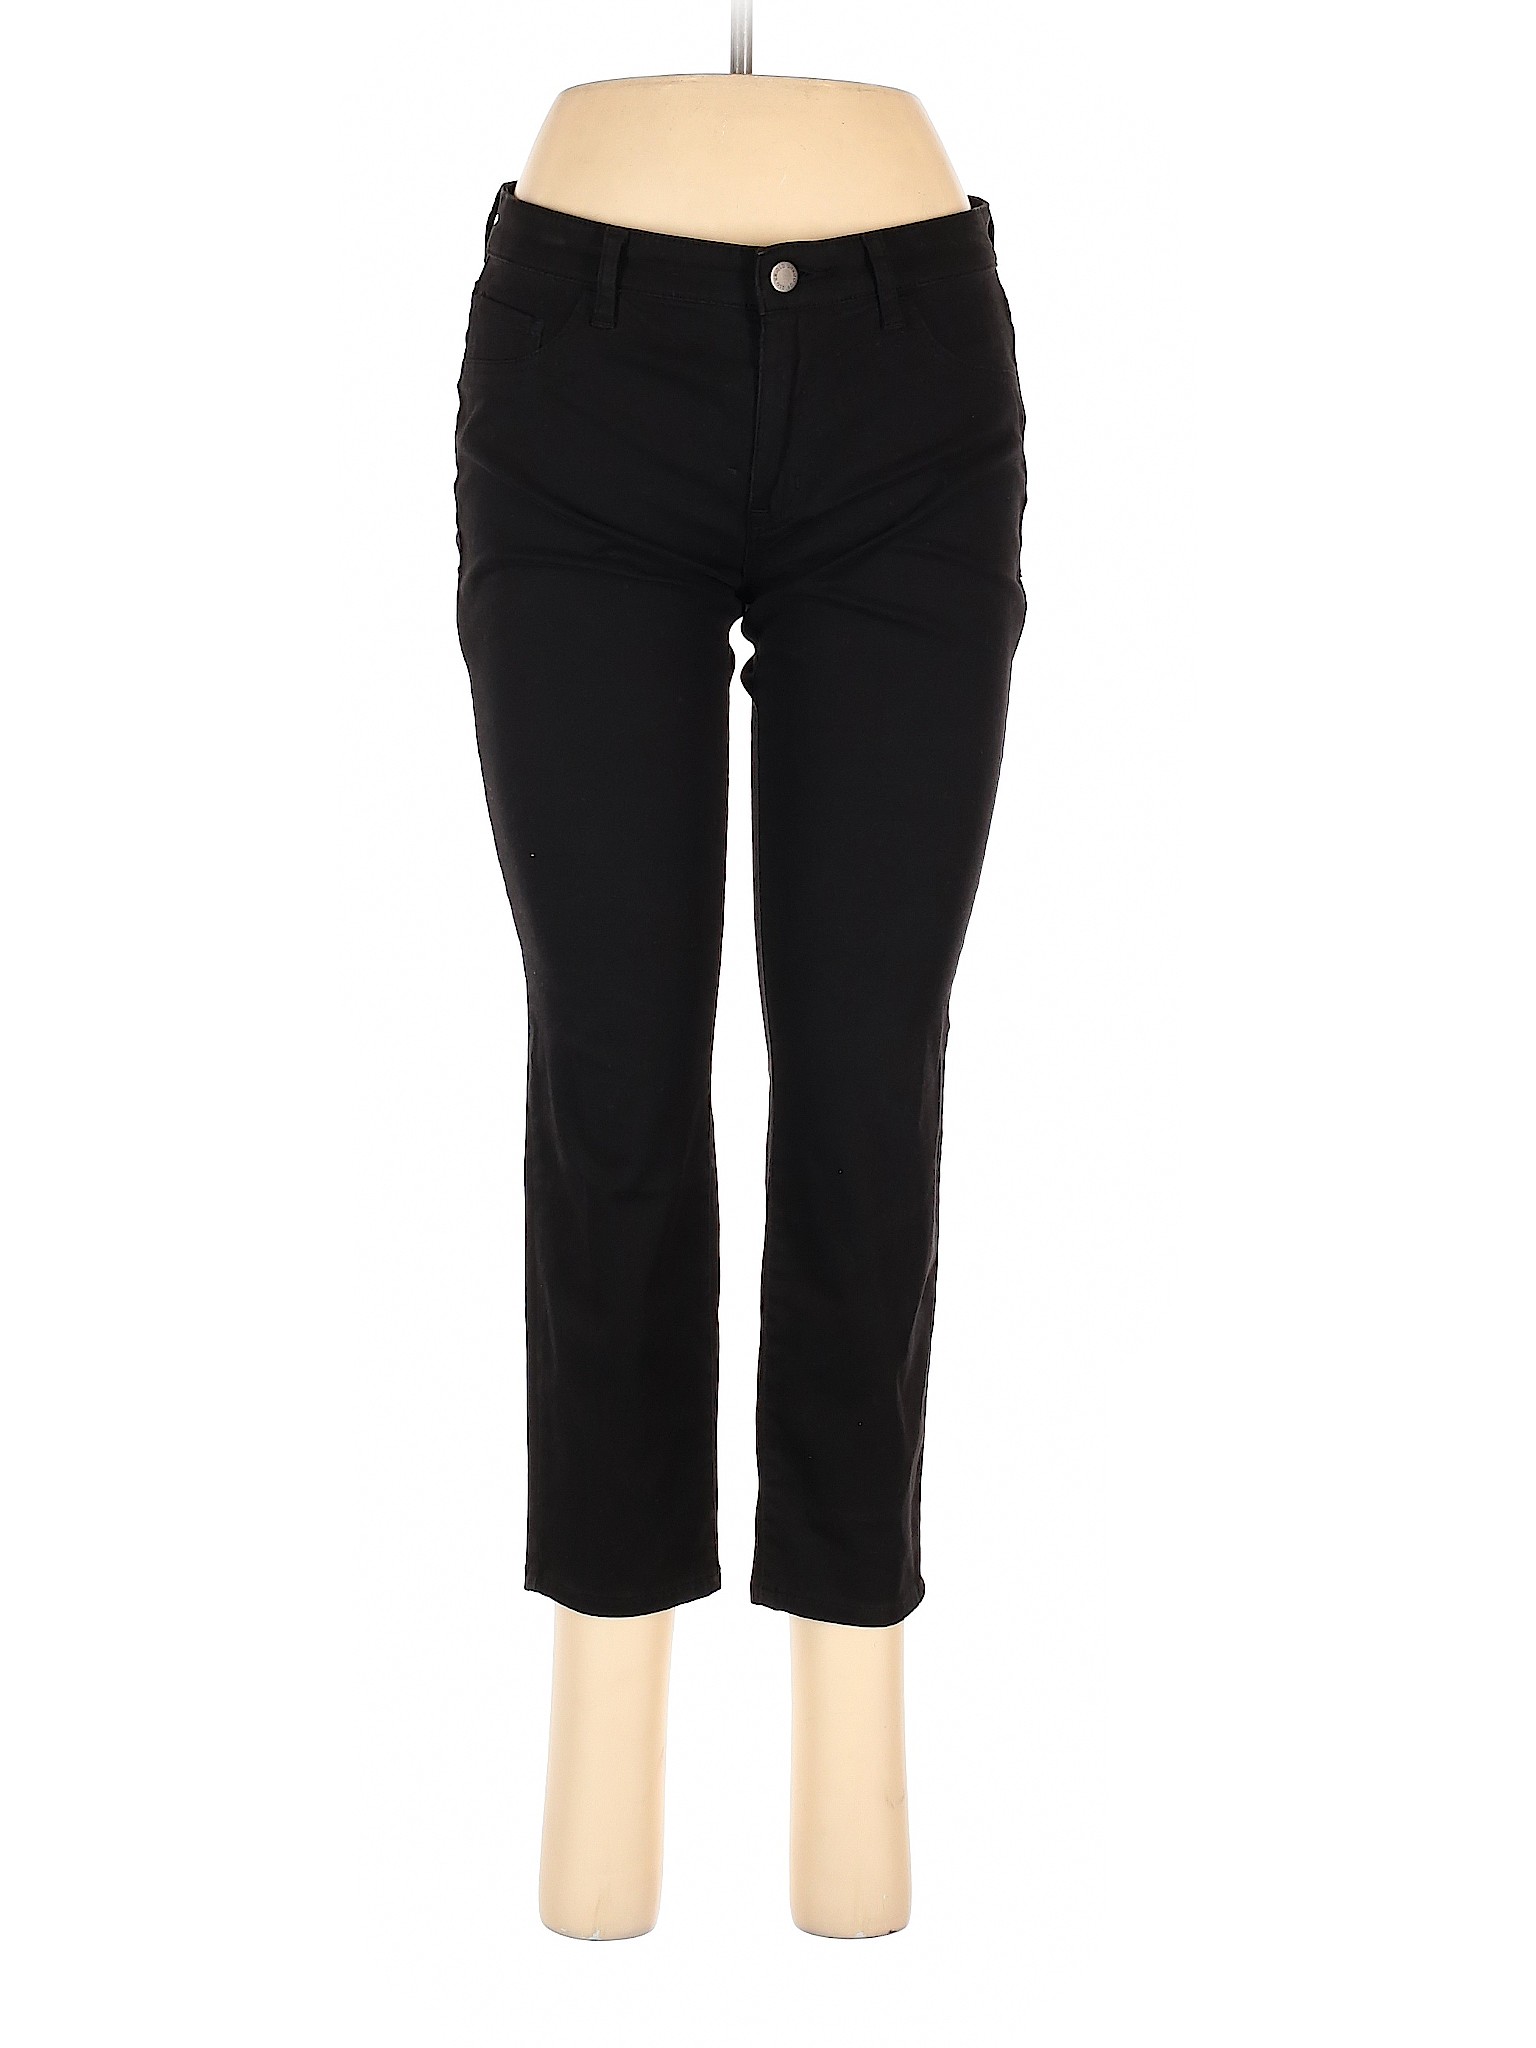 Uniqlo Women Black Casual Pants 28W | eBay